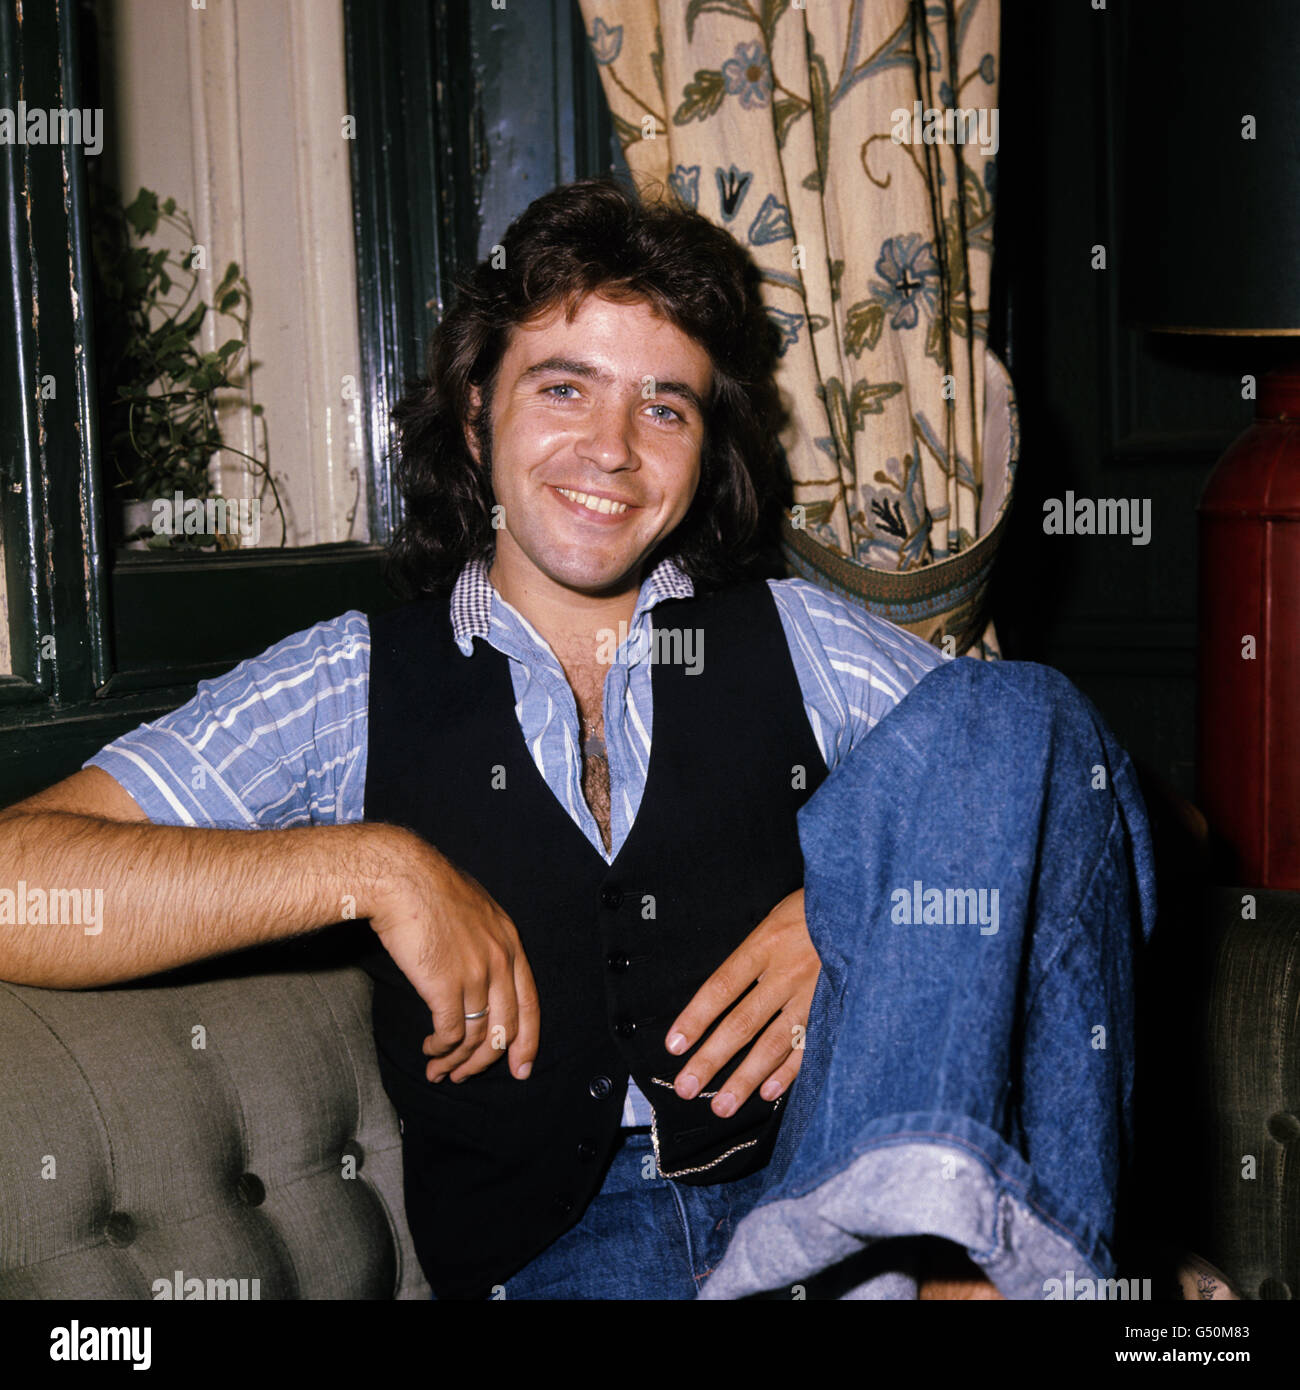 Music - David Essex - 1975. Pop singer David Essex. Stock Photo